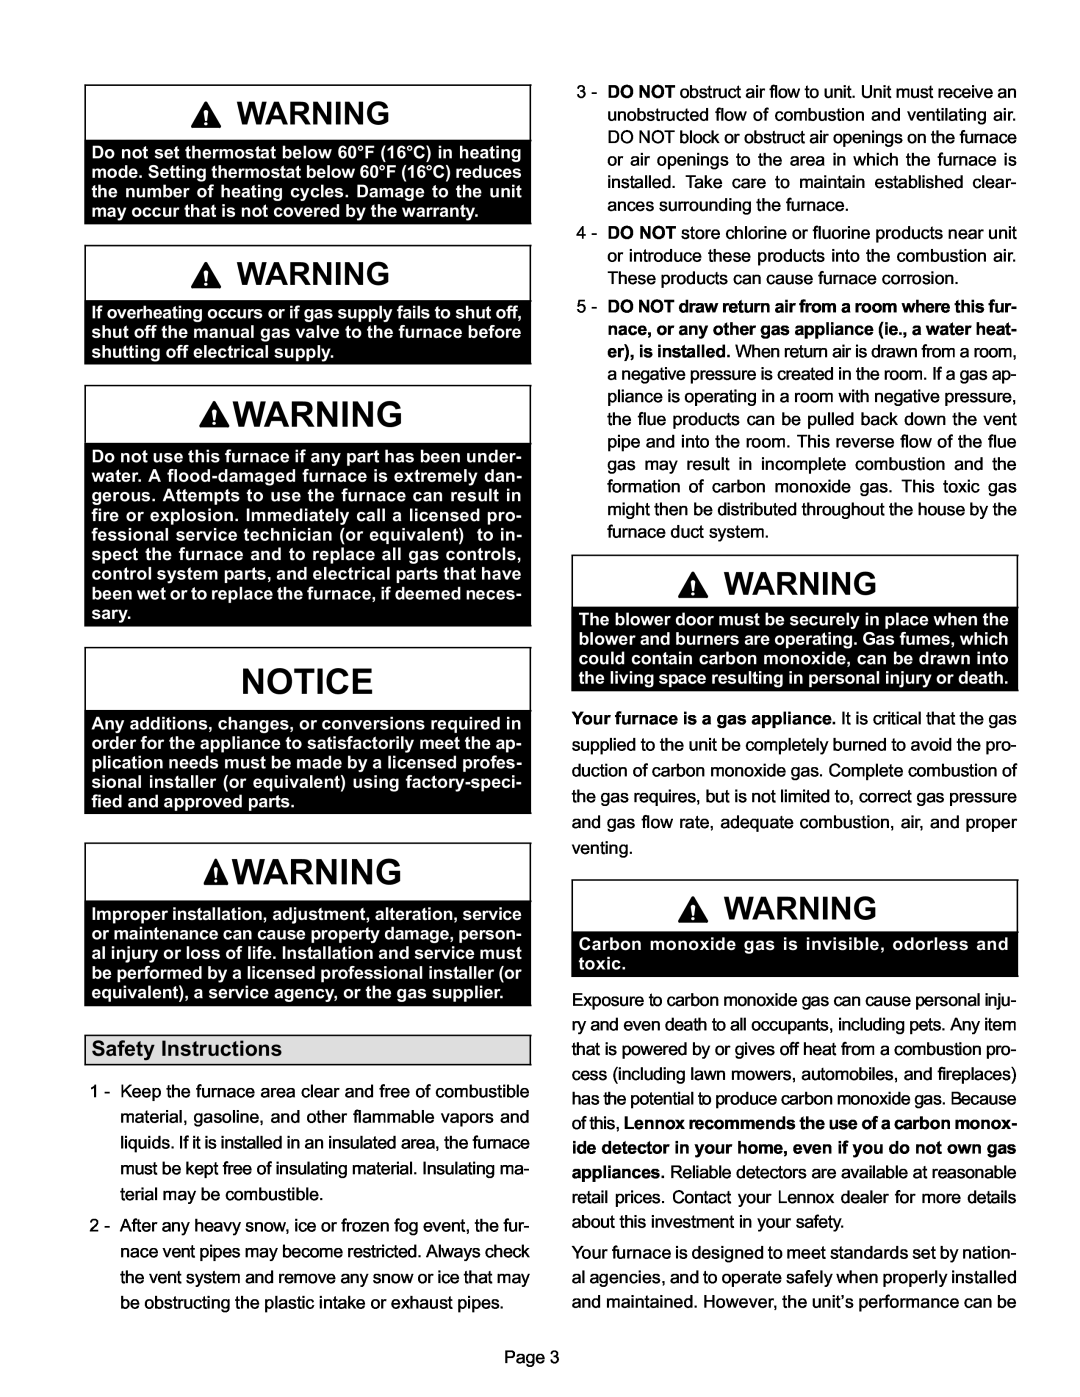 Lennox International Inc EL195DFE Series, Gas Furnace manual Safety Instructions 